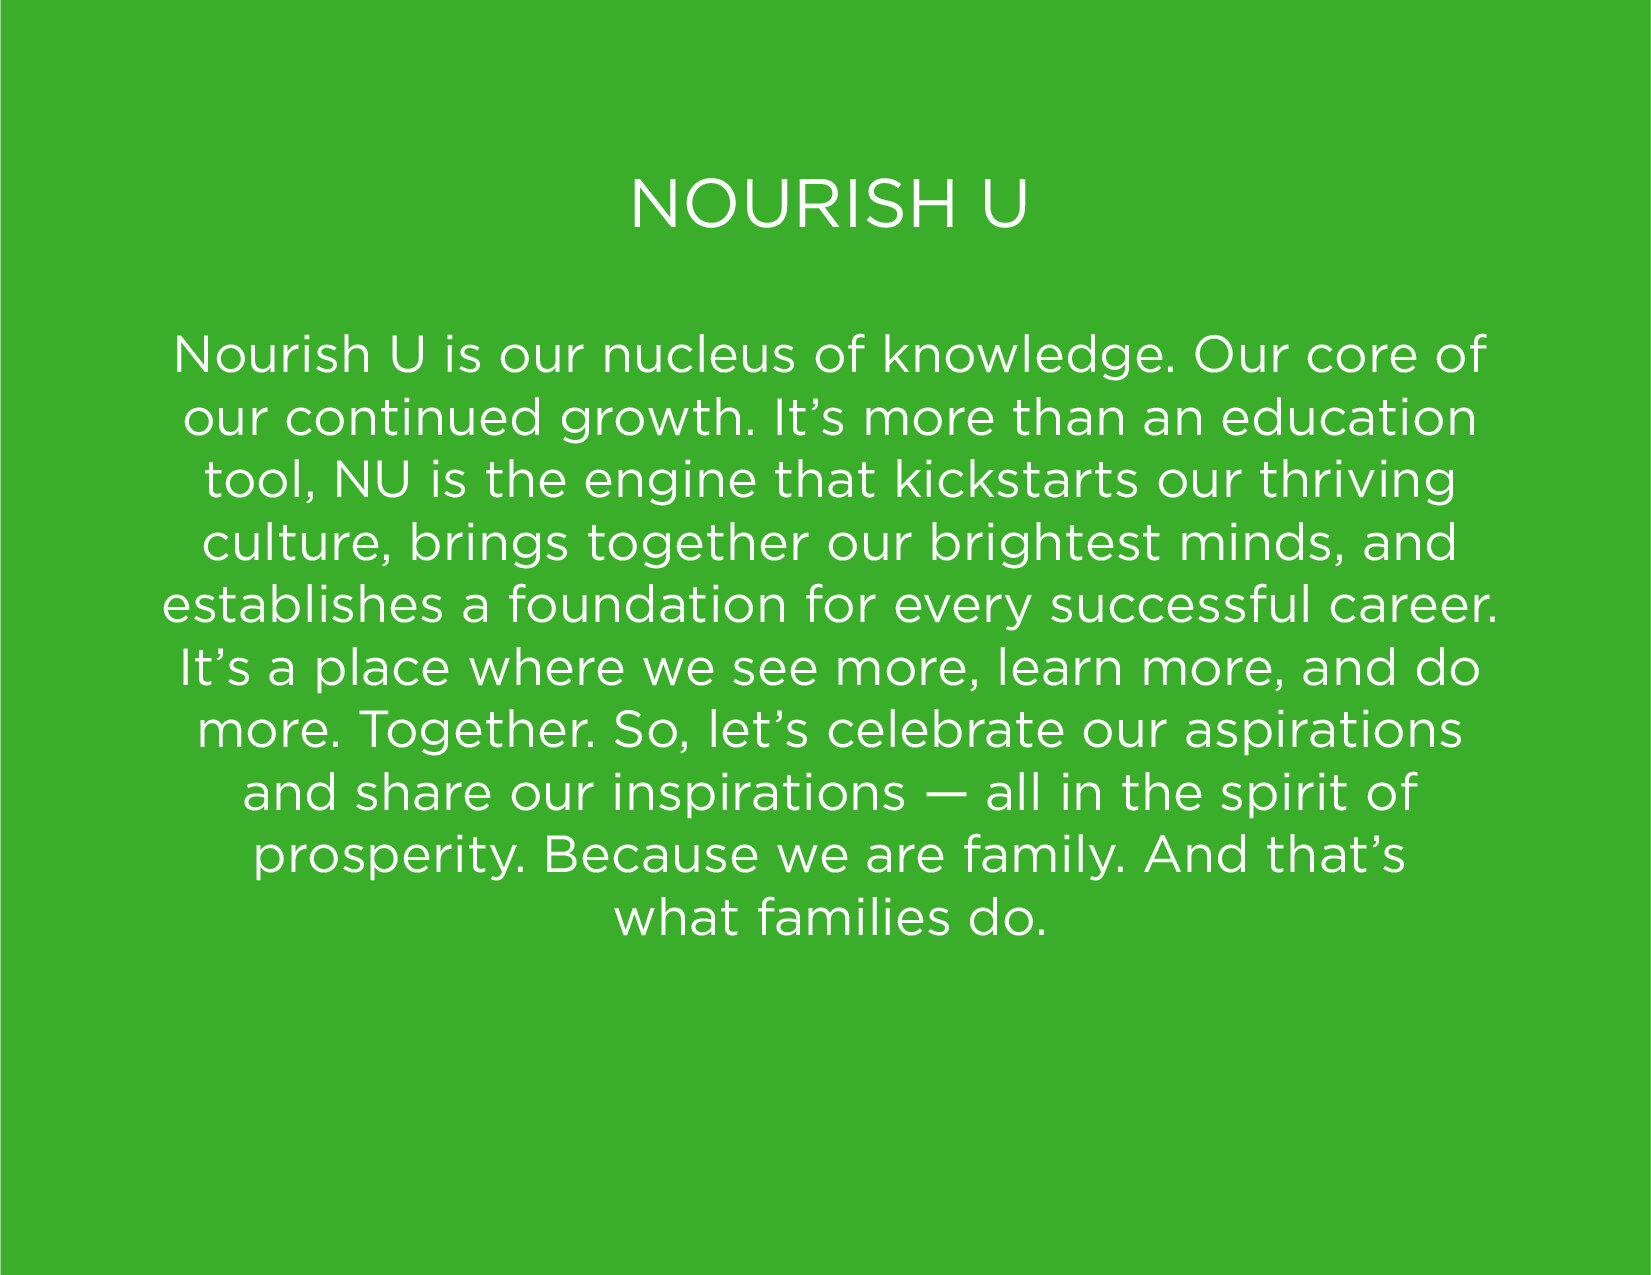 nourish_U_logos_portfolio-15.jpg